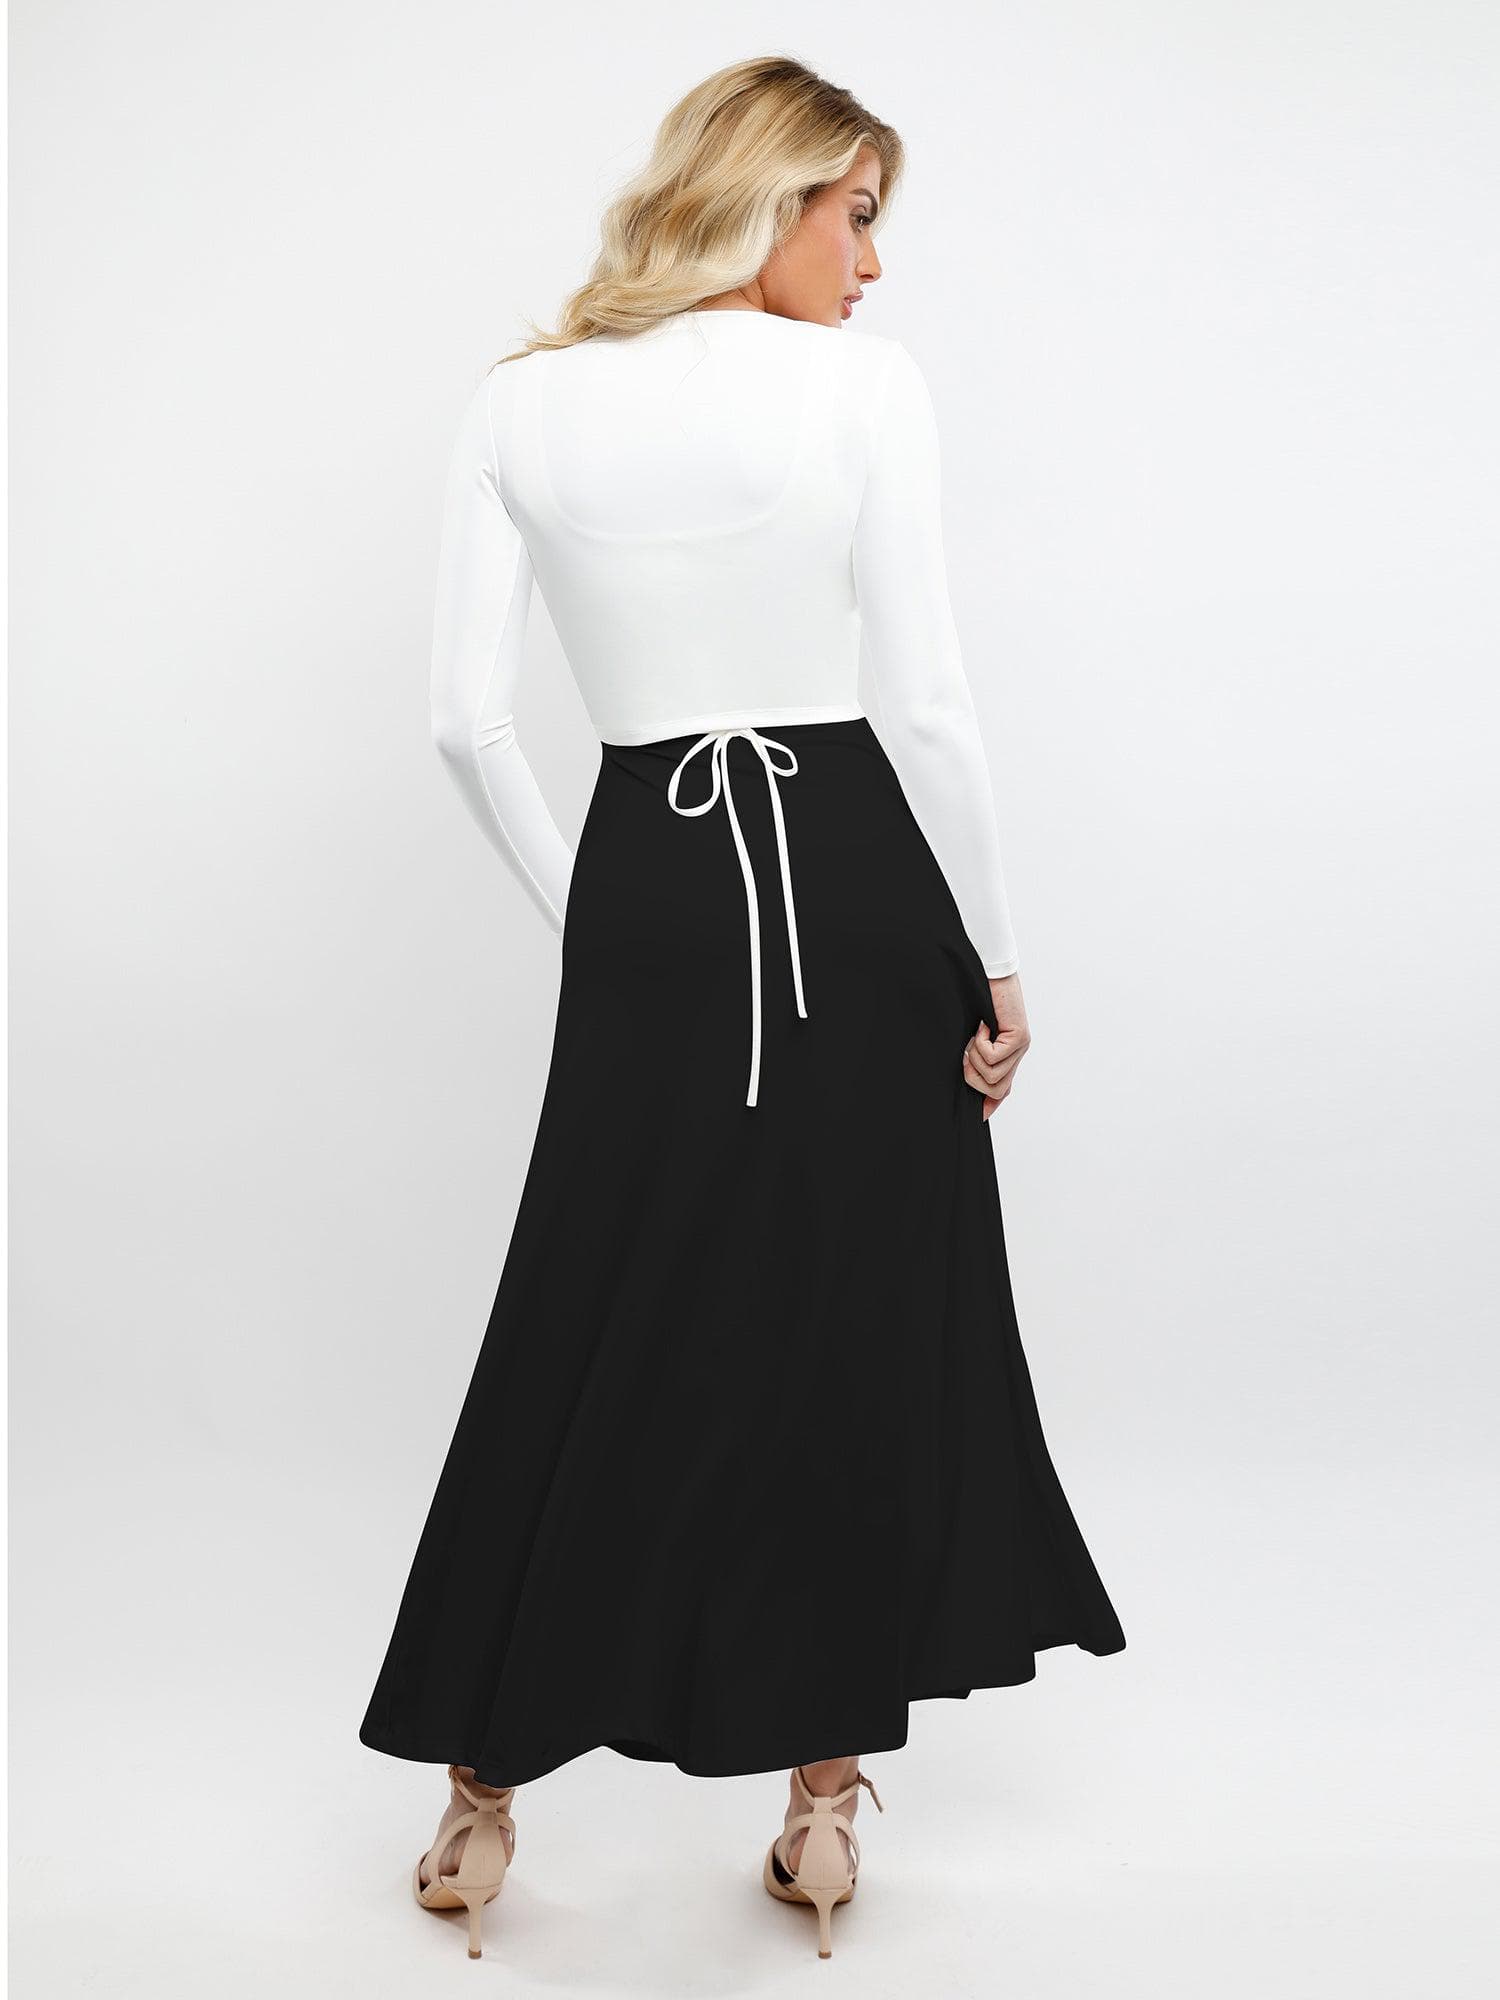 Popilush Long-Sleeve Cardigan 2 Piece Outfit Built-In Shapewear Sleeveless Maxi Dress Or Set